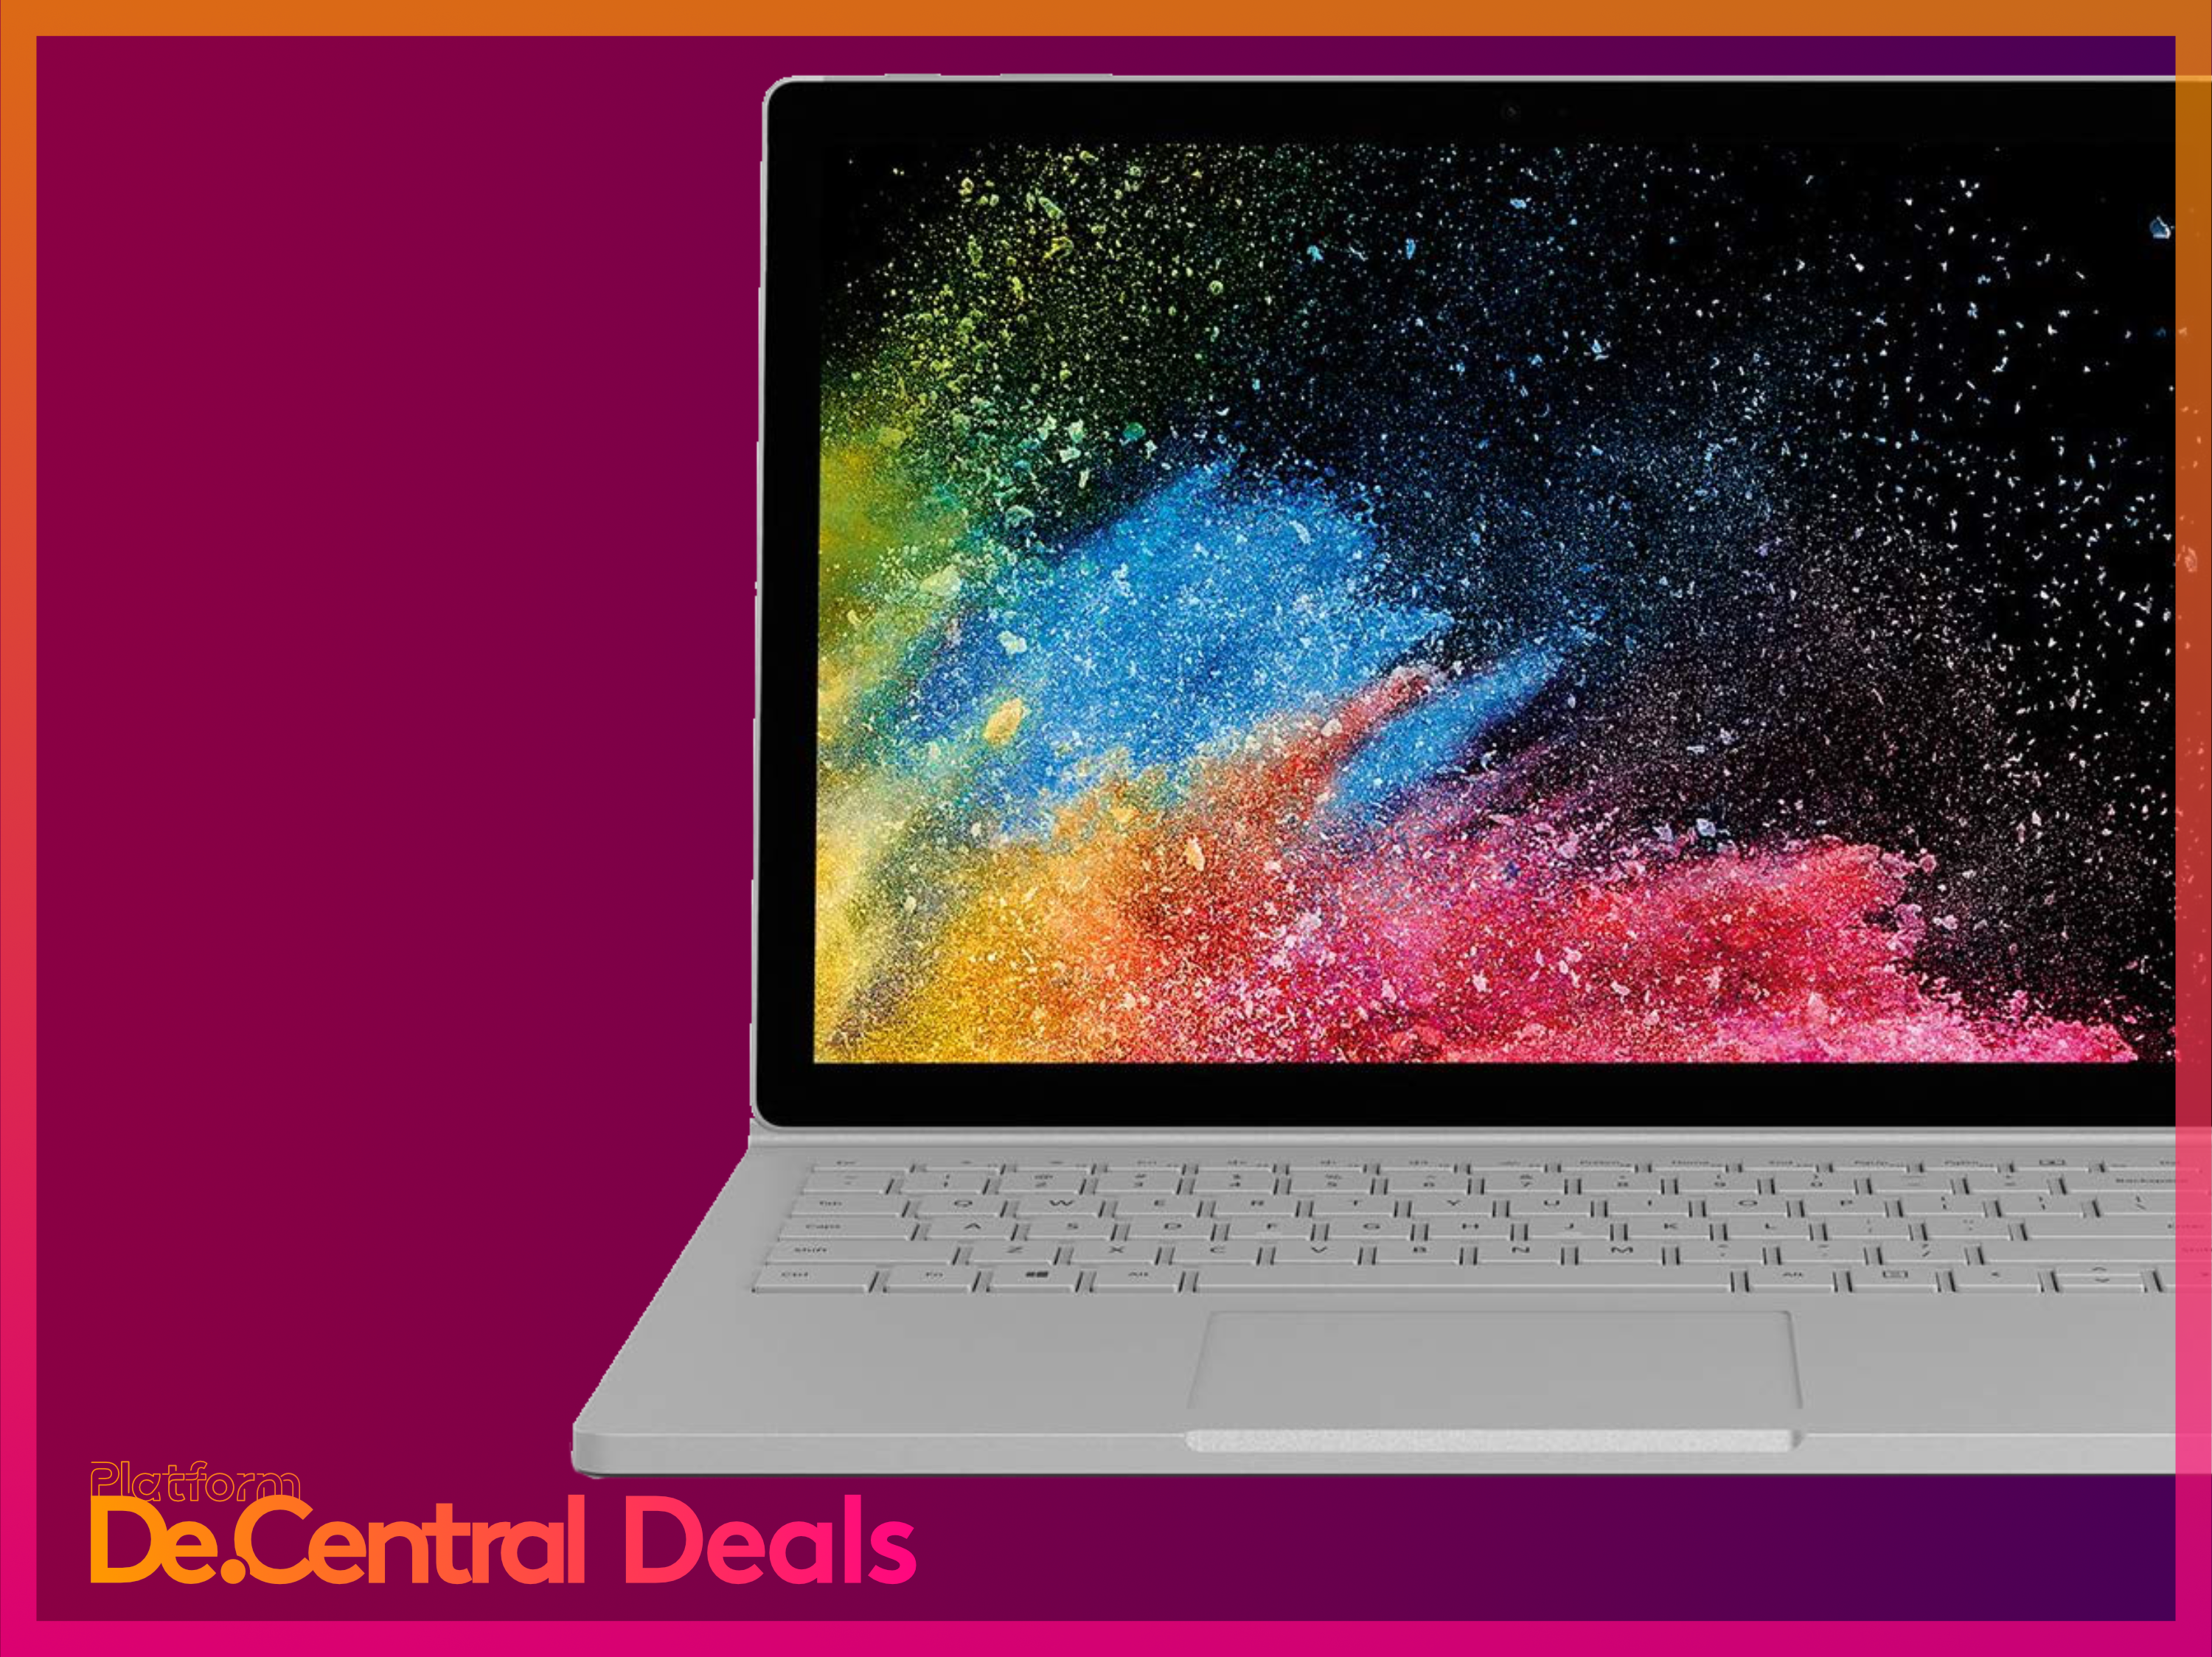 De.Central Deals | Save $690 on Surface Book 2